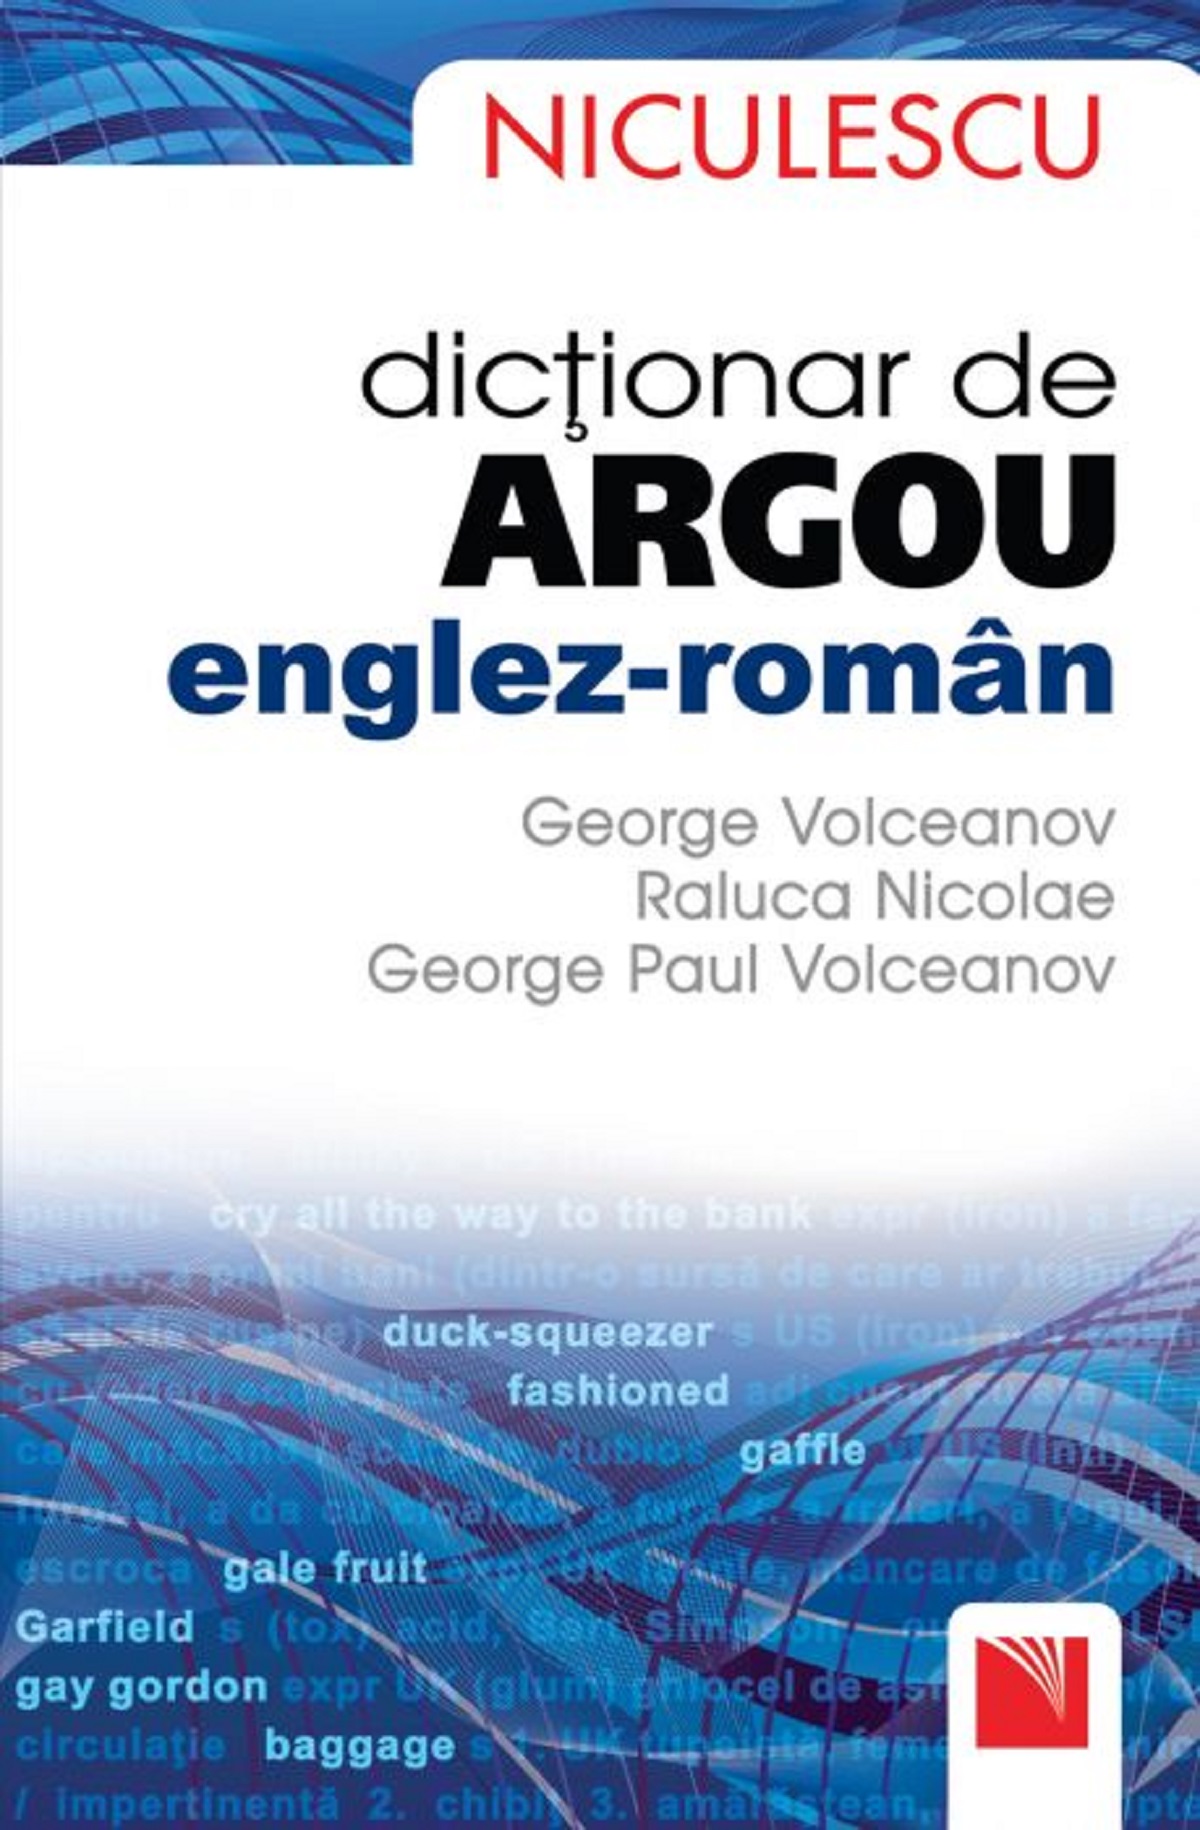 Dictionar de argou englez-roman - George Volceanov, Raluca Nicolae, George Paul Volceanov